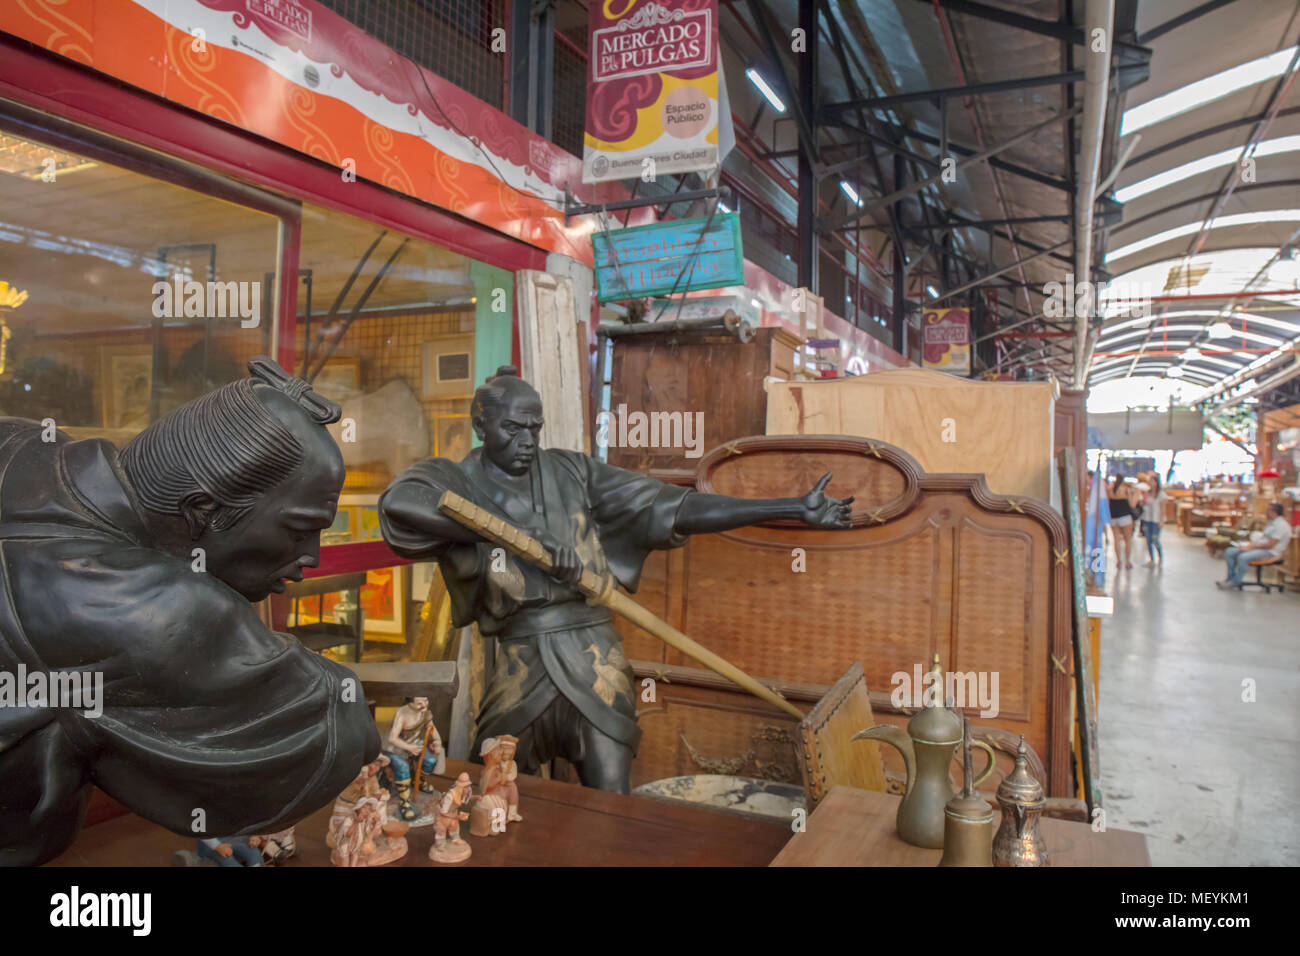 Vintage objects on sale inside the 'Flea market' (Mercado de las Pulgas) in Buenos Aires, Argentina. Stock Photo